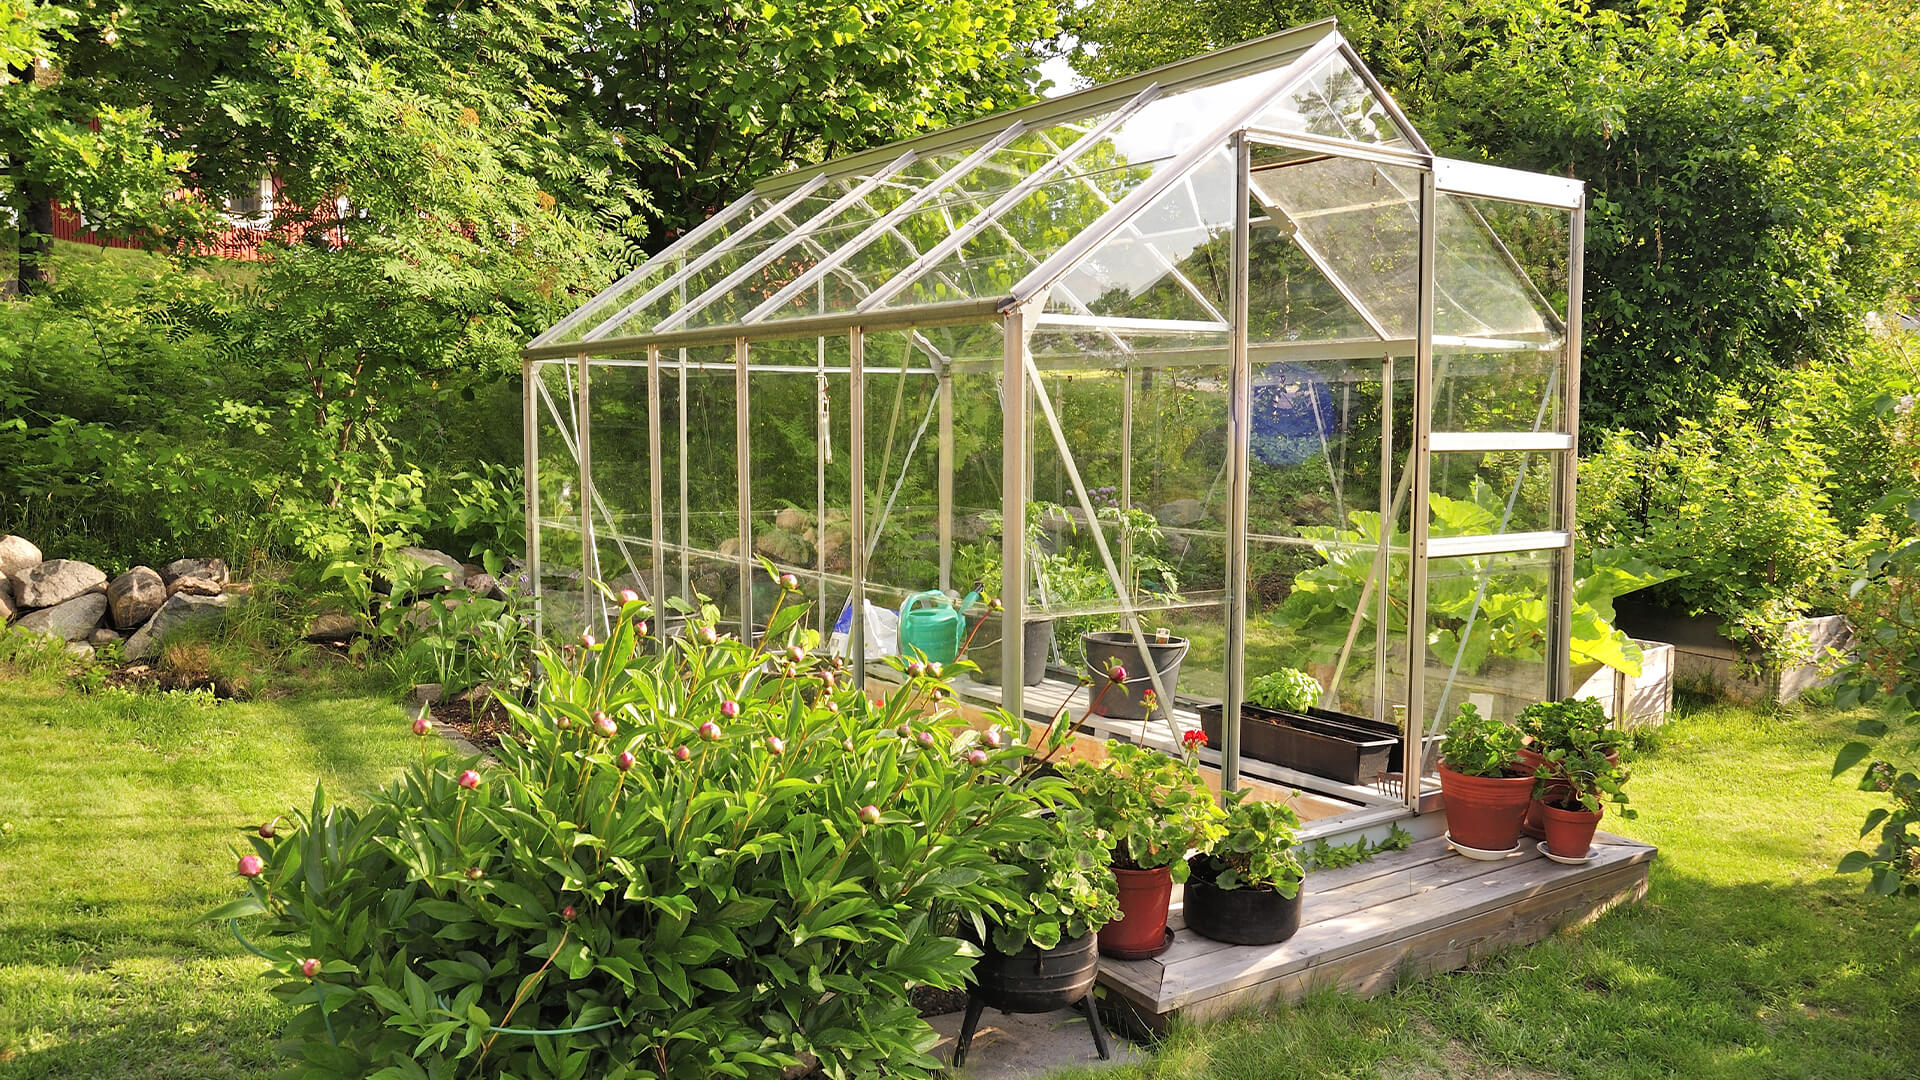 Increasing Shrubs In The Greenhouse